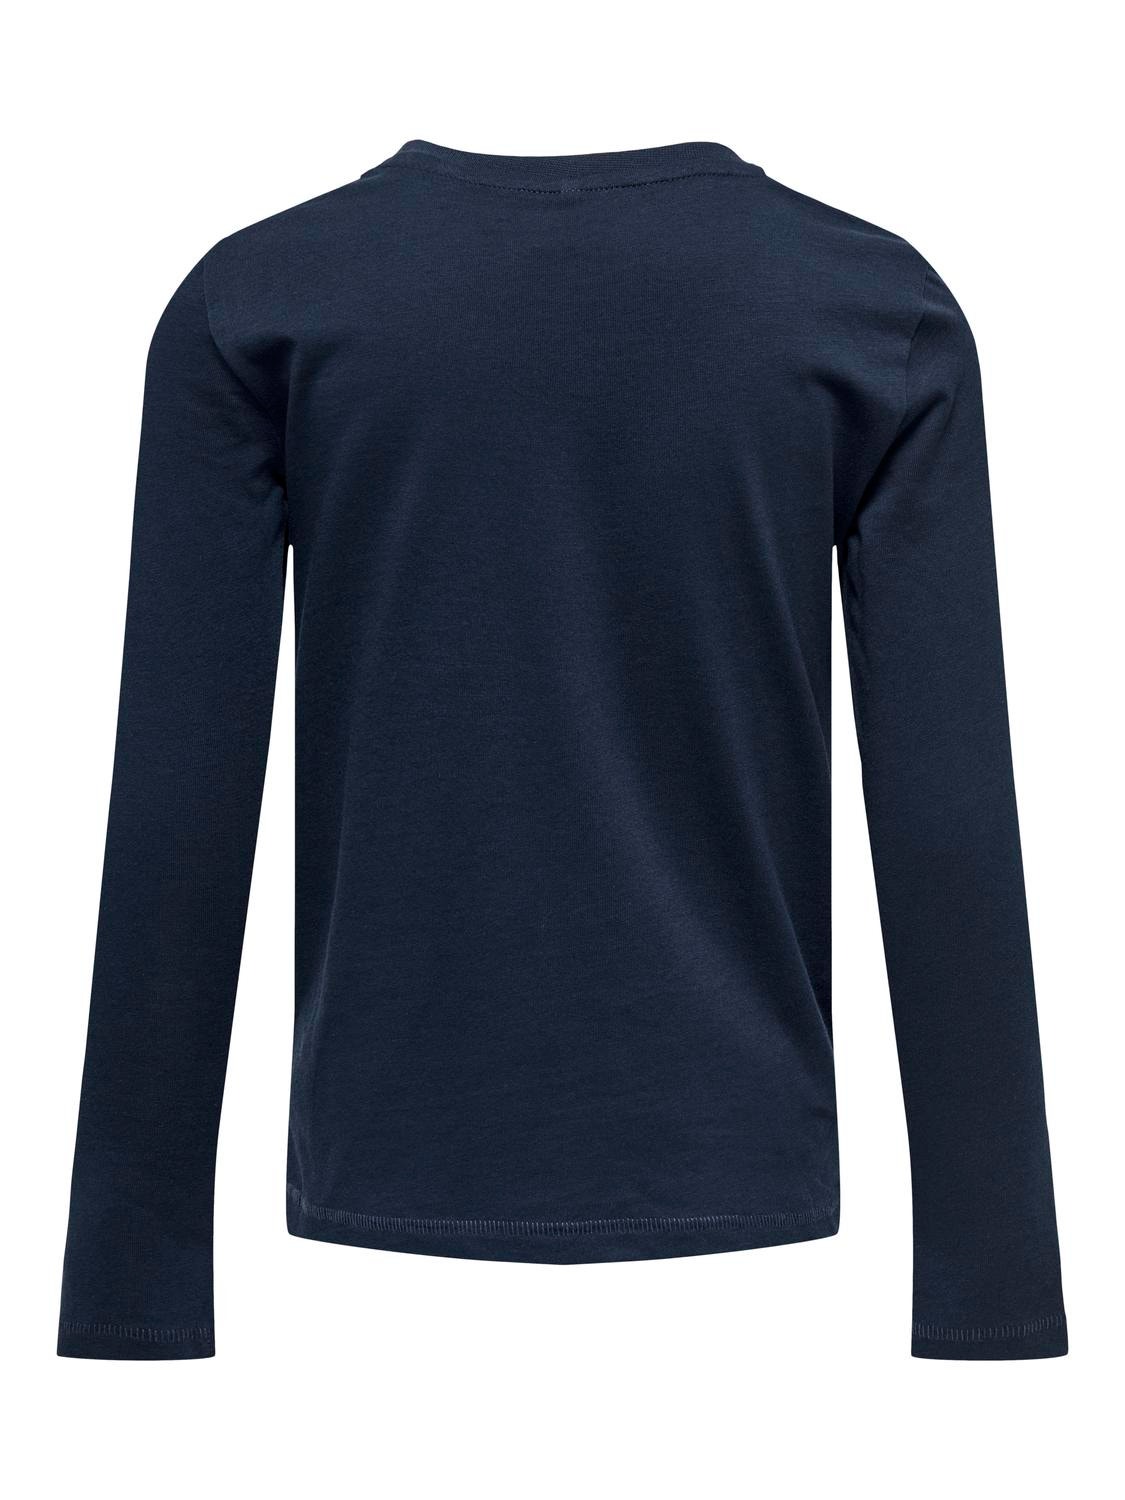 ONLY Camisetas Corte regular Cuello redondo -Dress Blues - 15303285